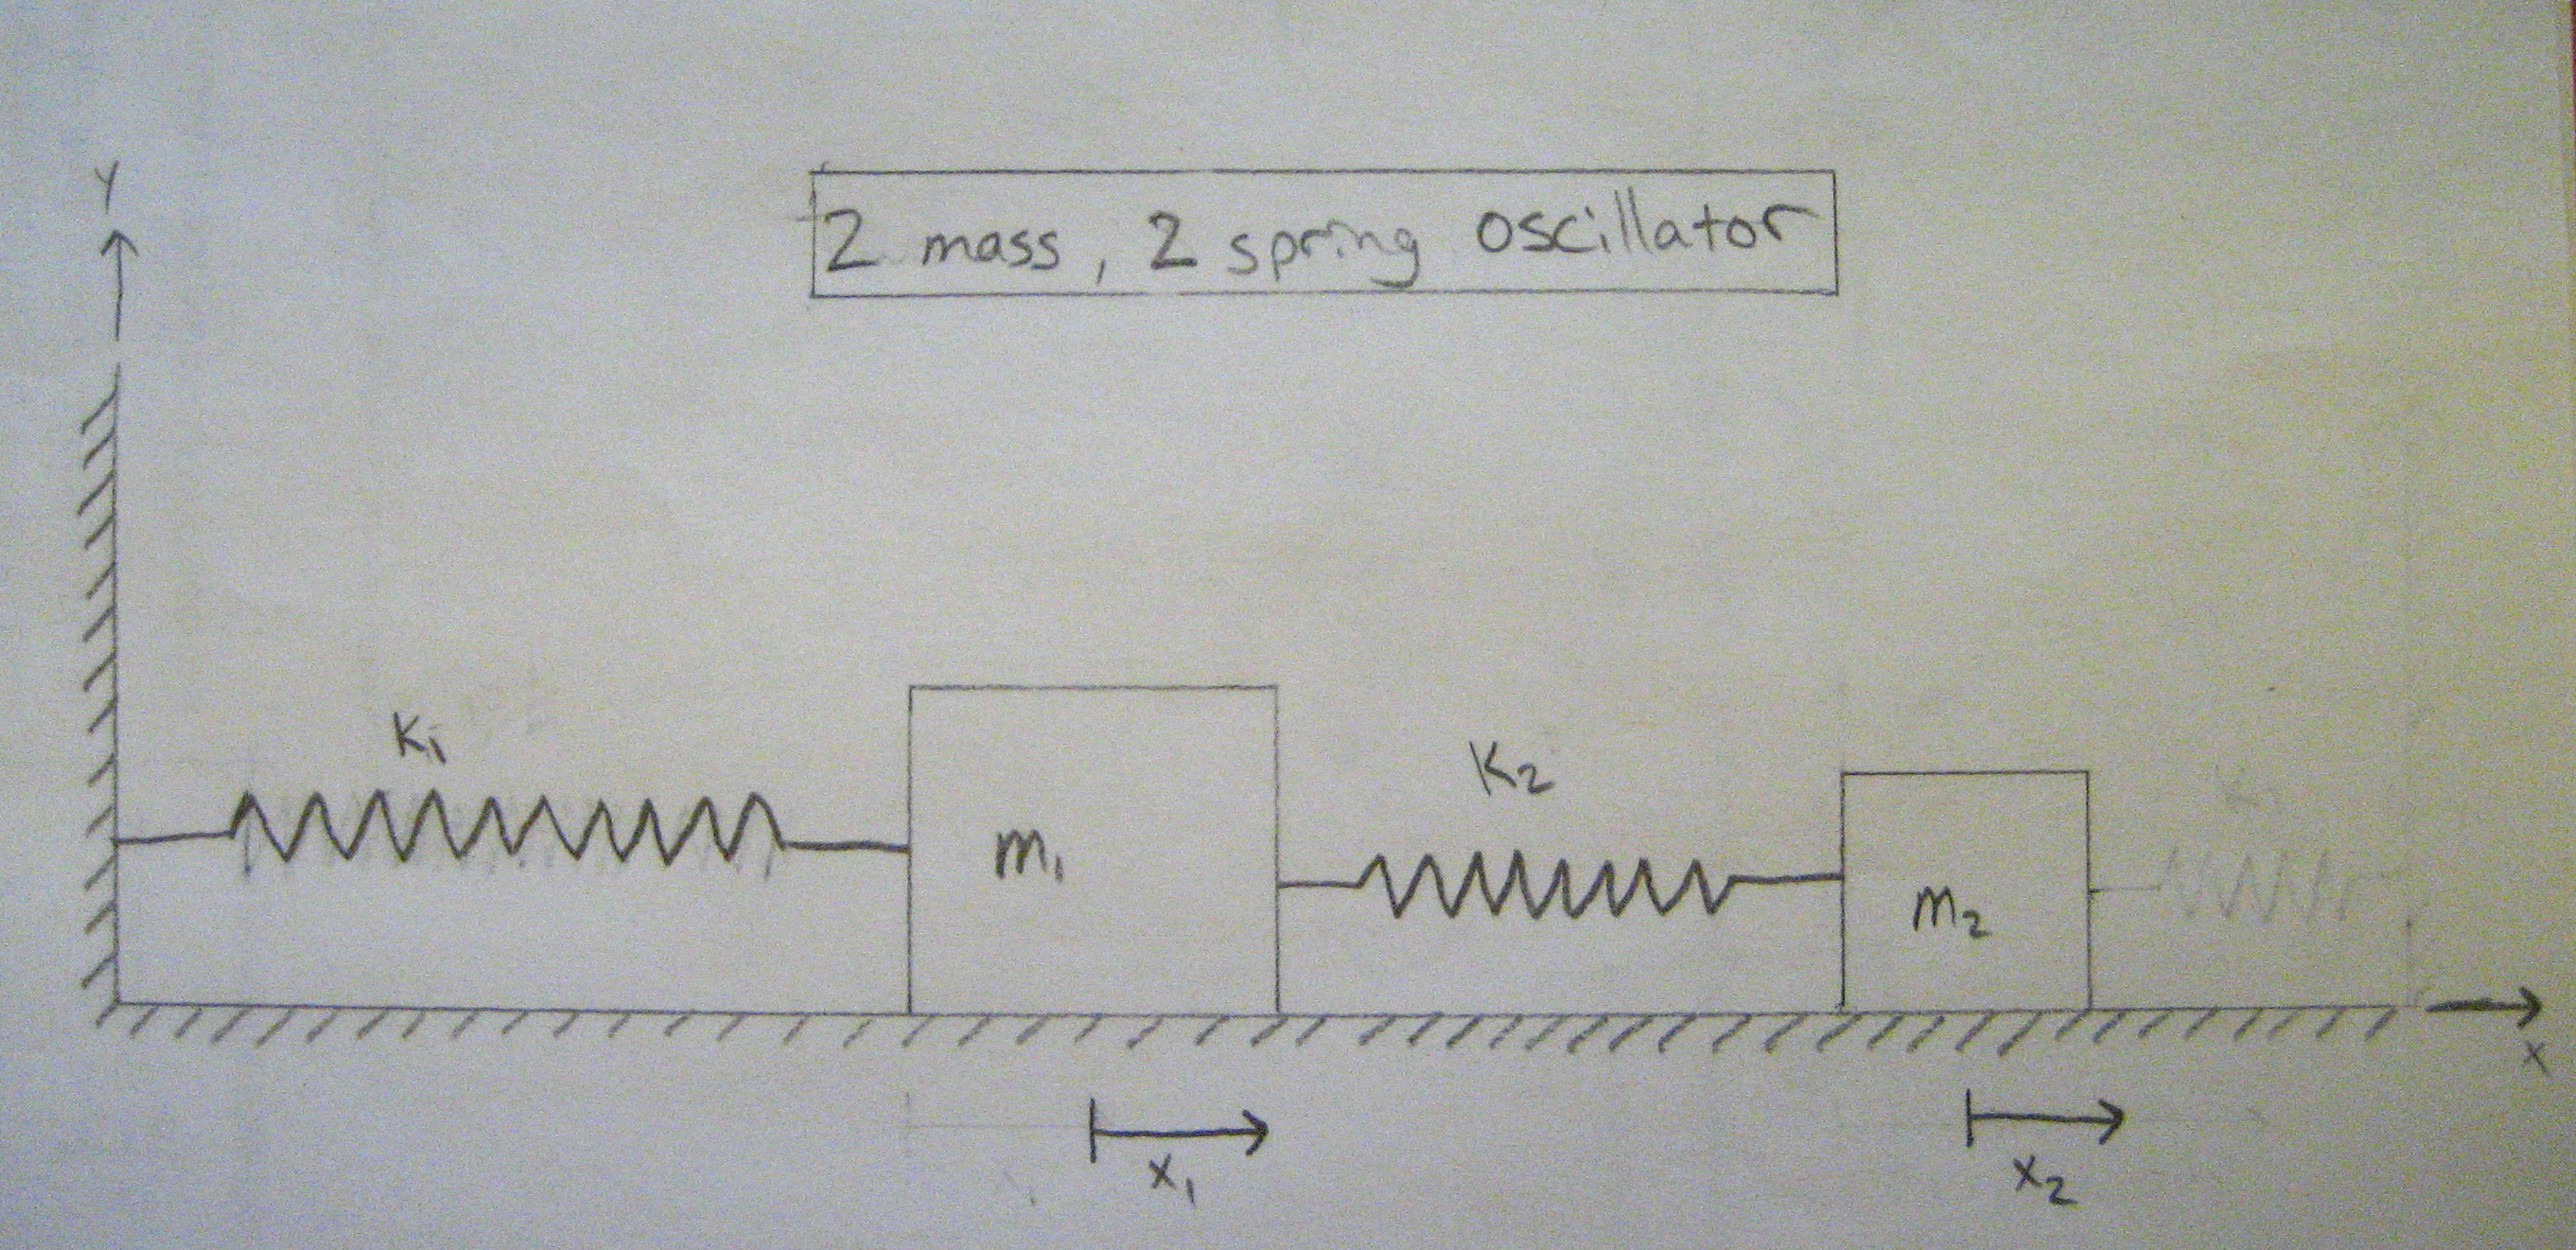 Double Oscillator System.JPG